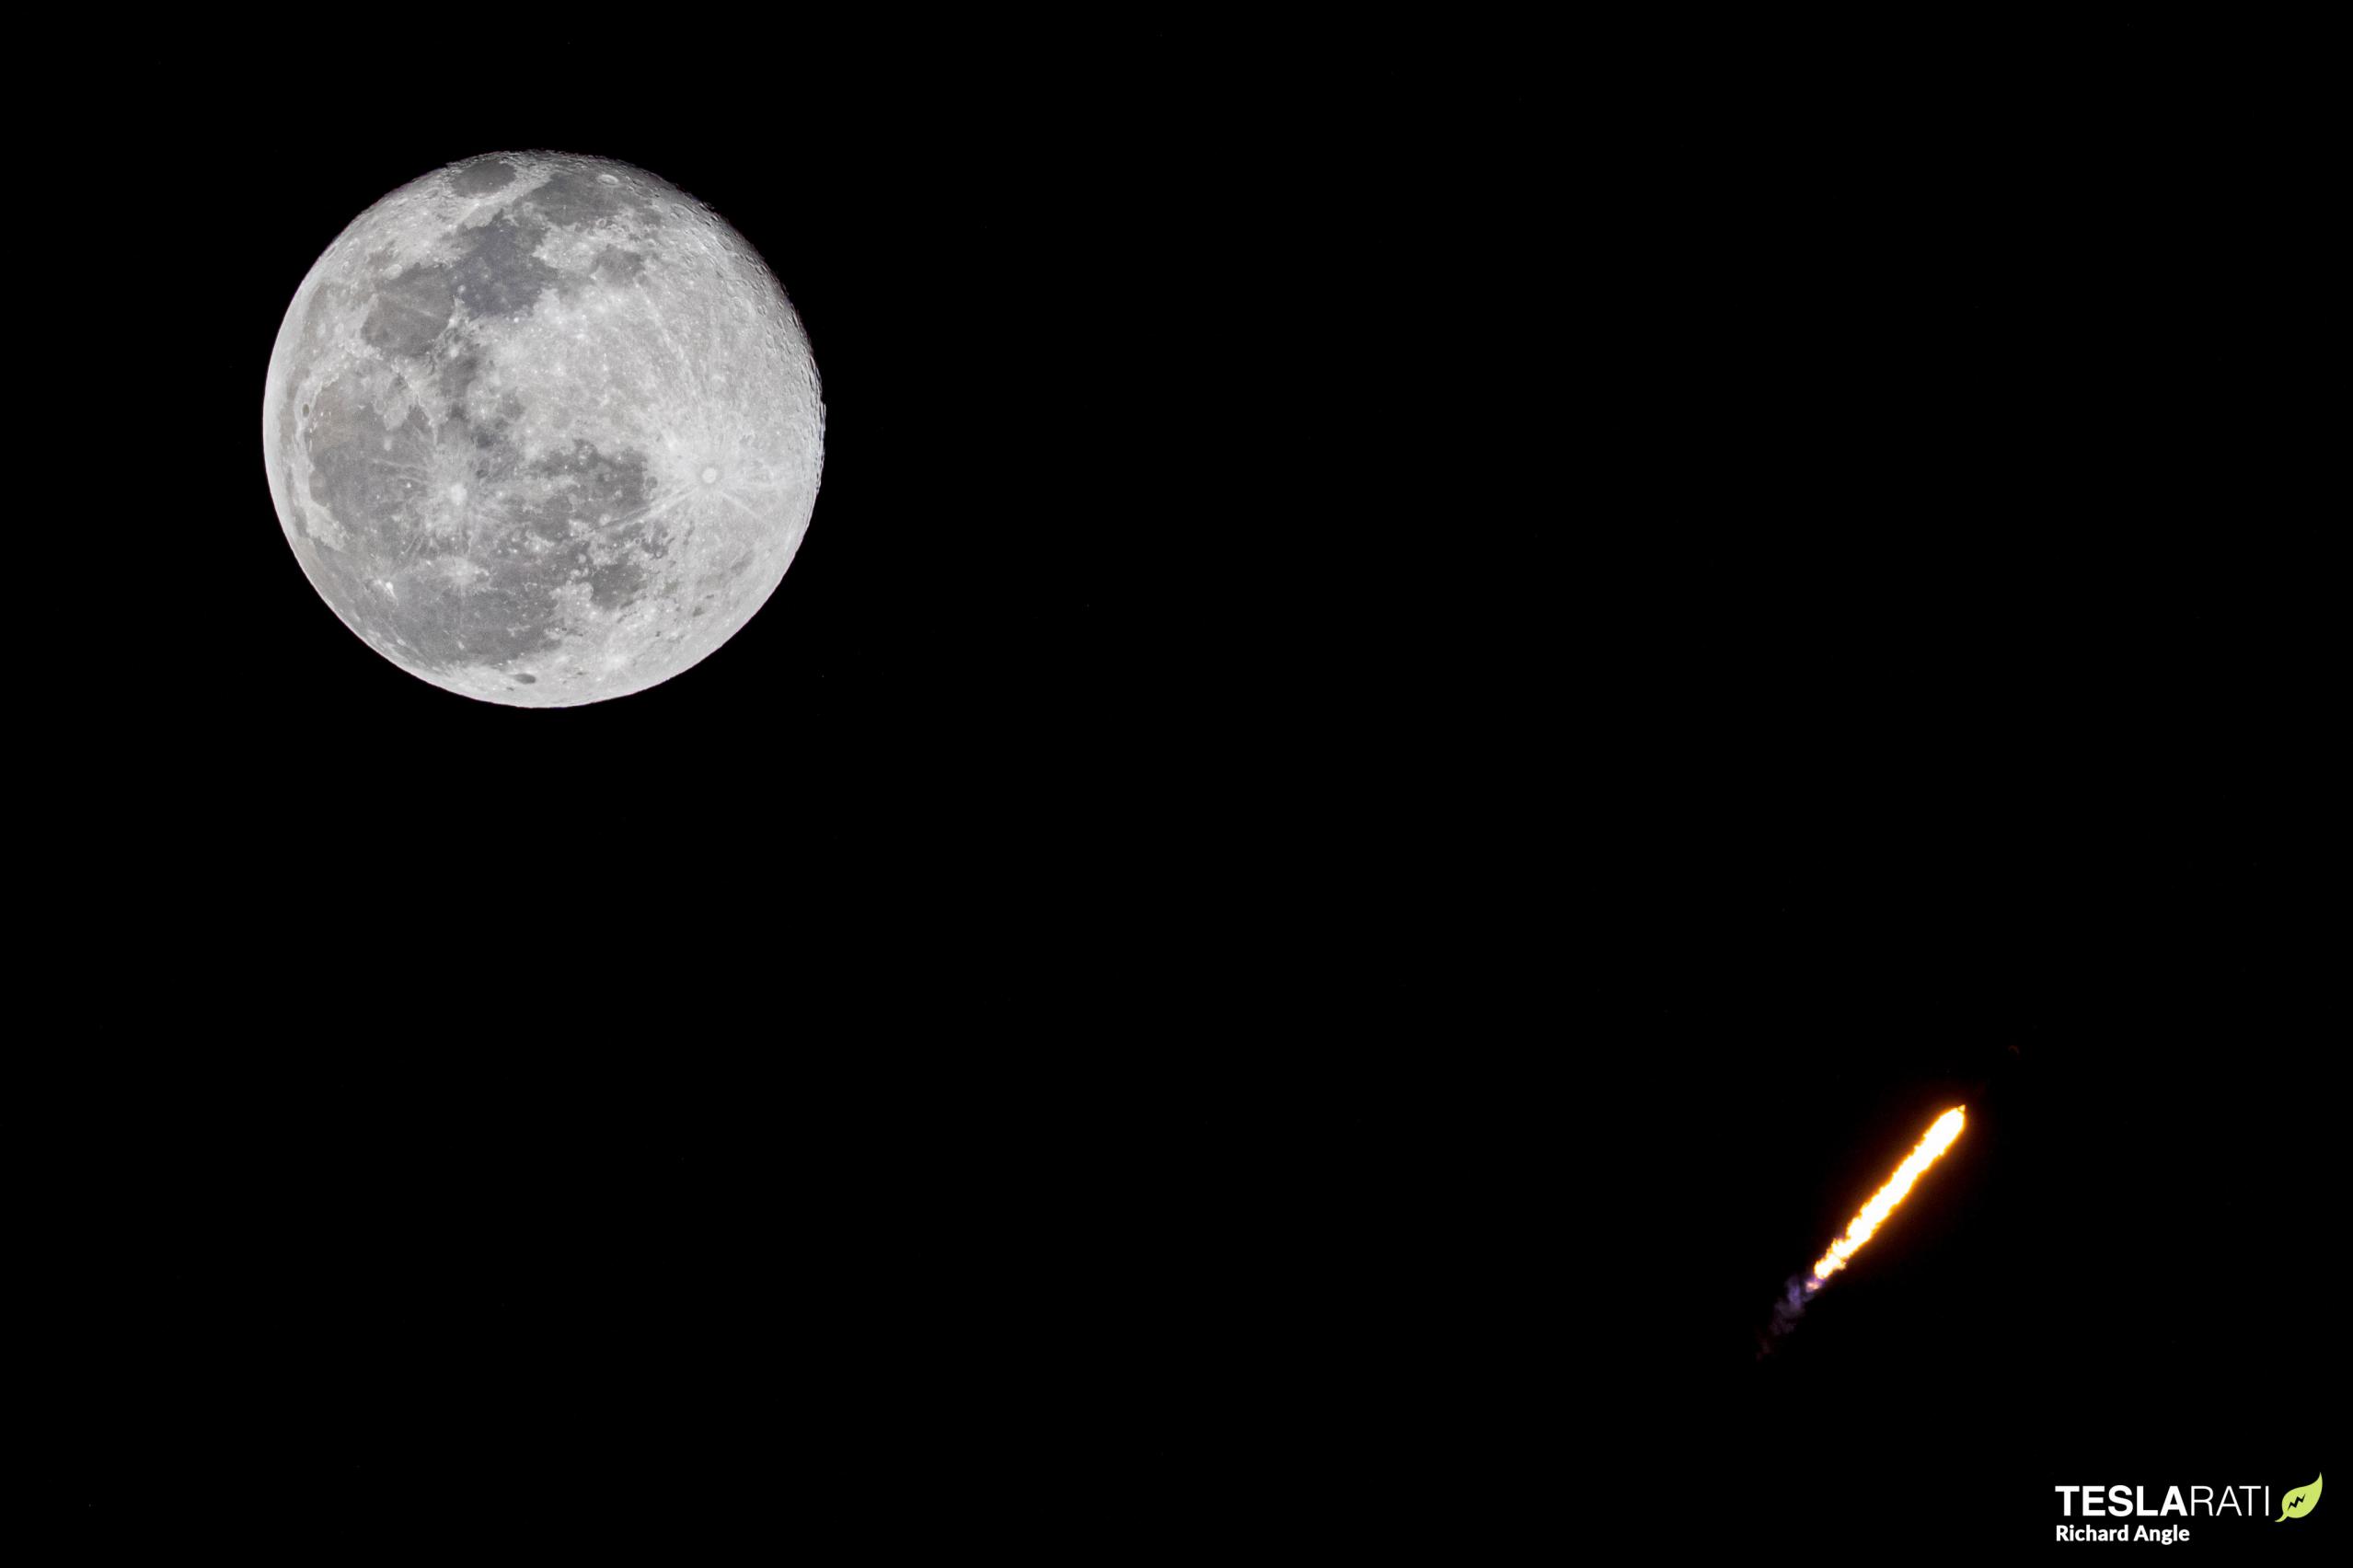 Starlink 4-6 F9 B1060 39A 011822 (Richard Angle) moon launch 1 (c)